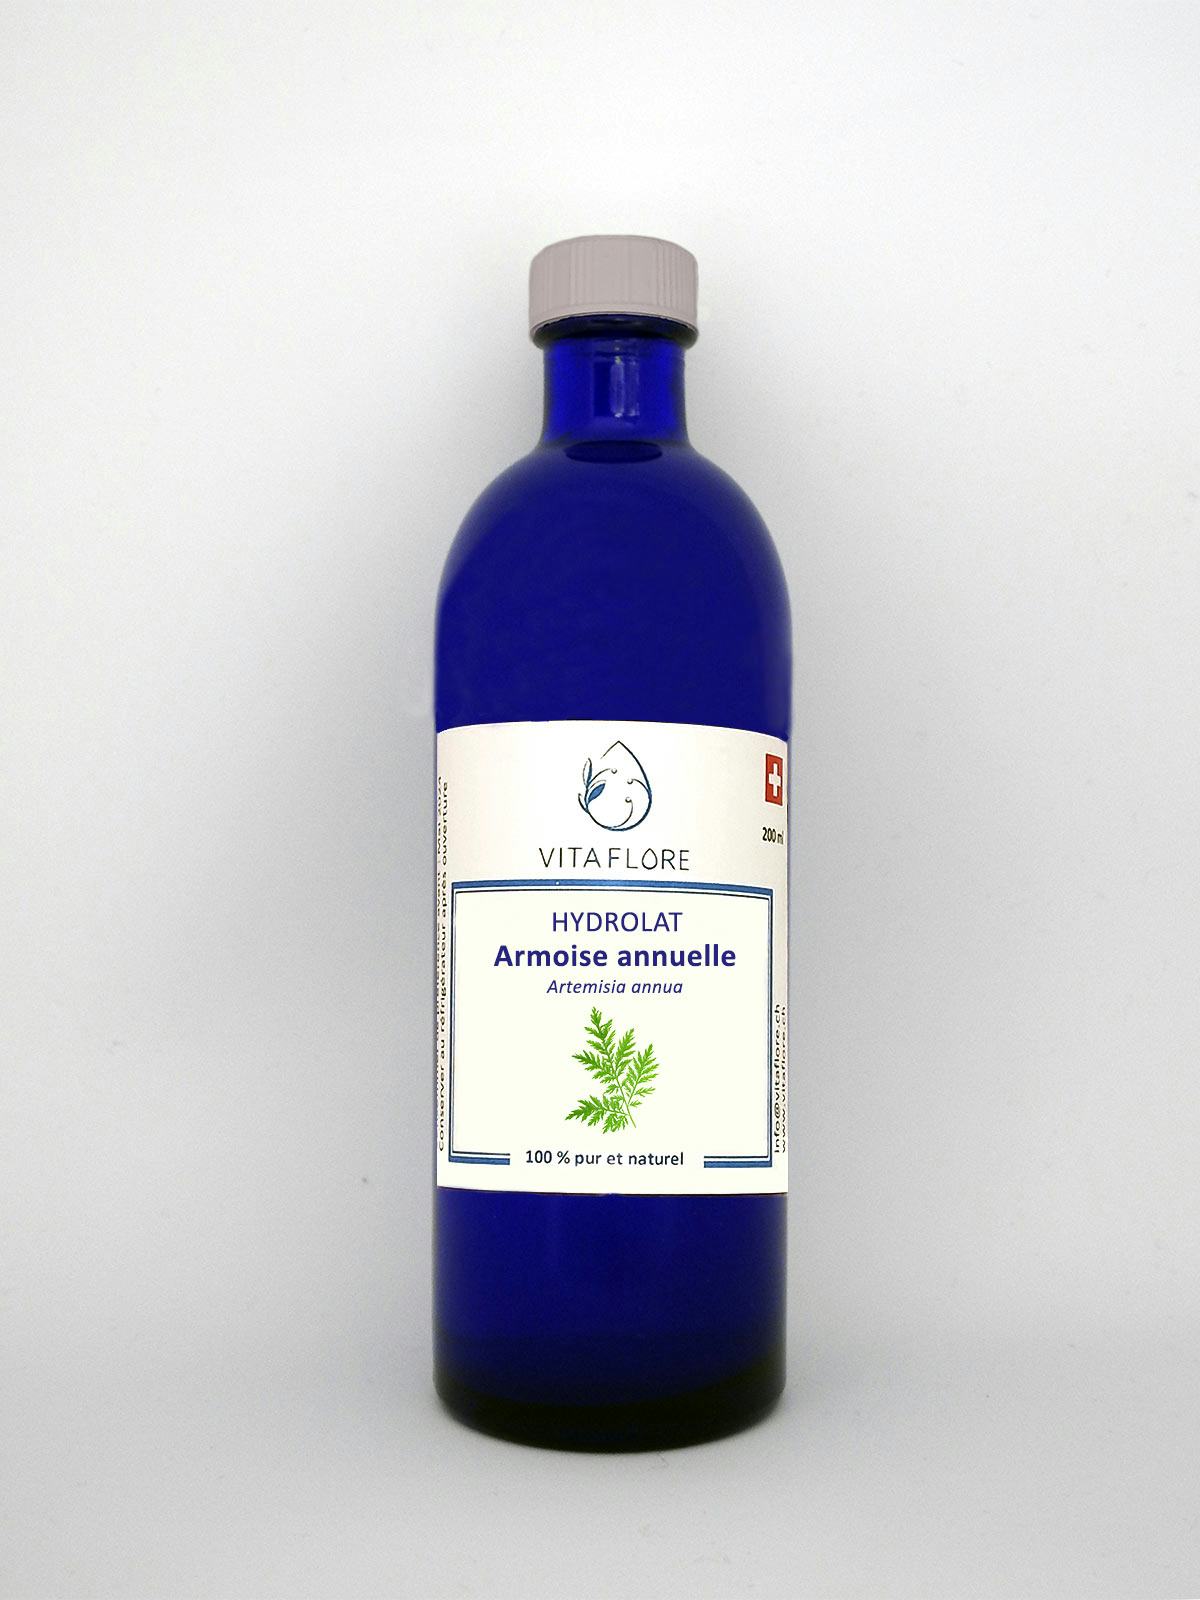 Annual mugwort hydrosol, artisanal product for direct sale in Switzerland